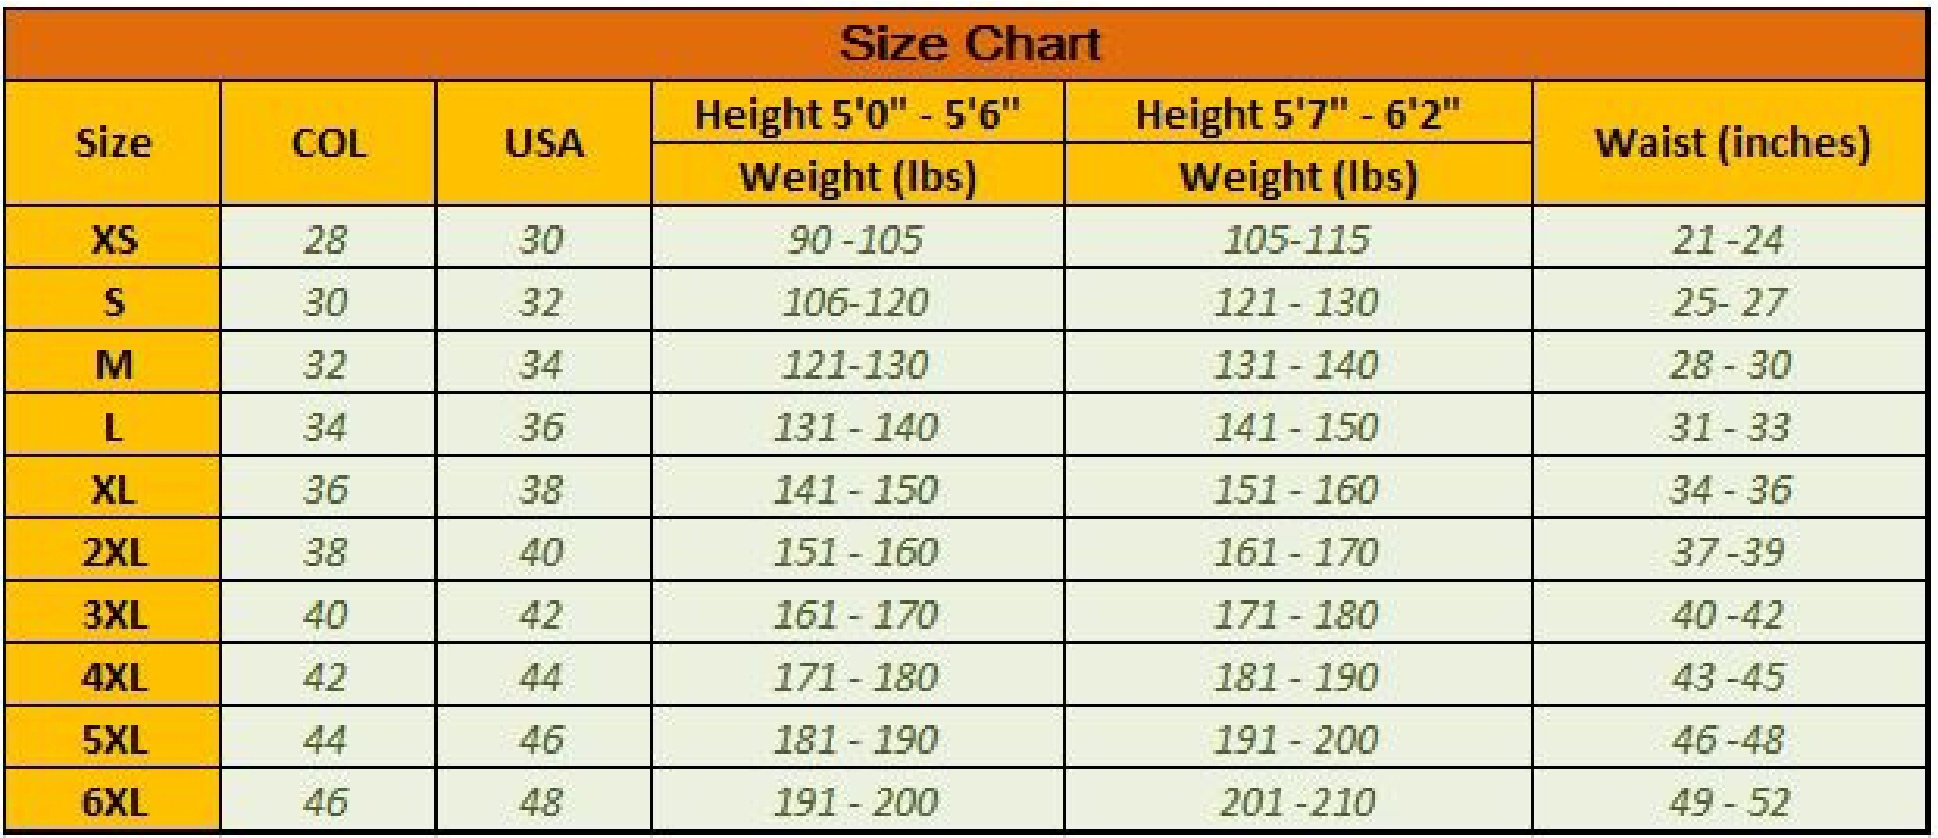 Size And Waist Chart